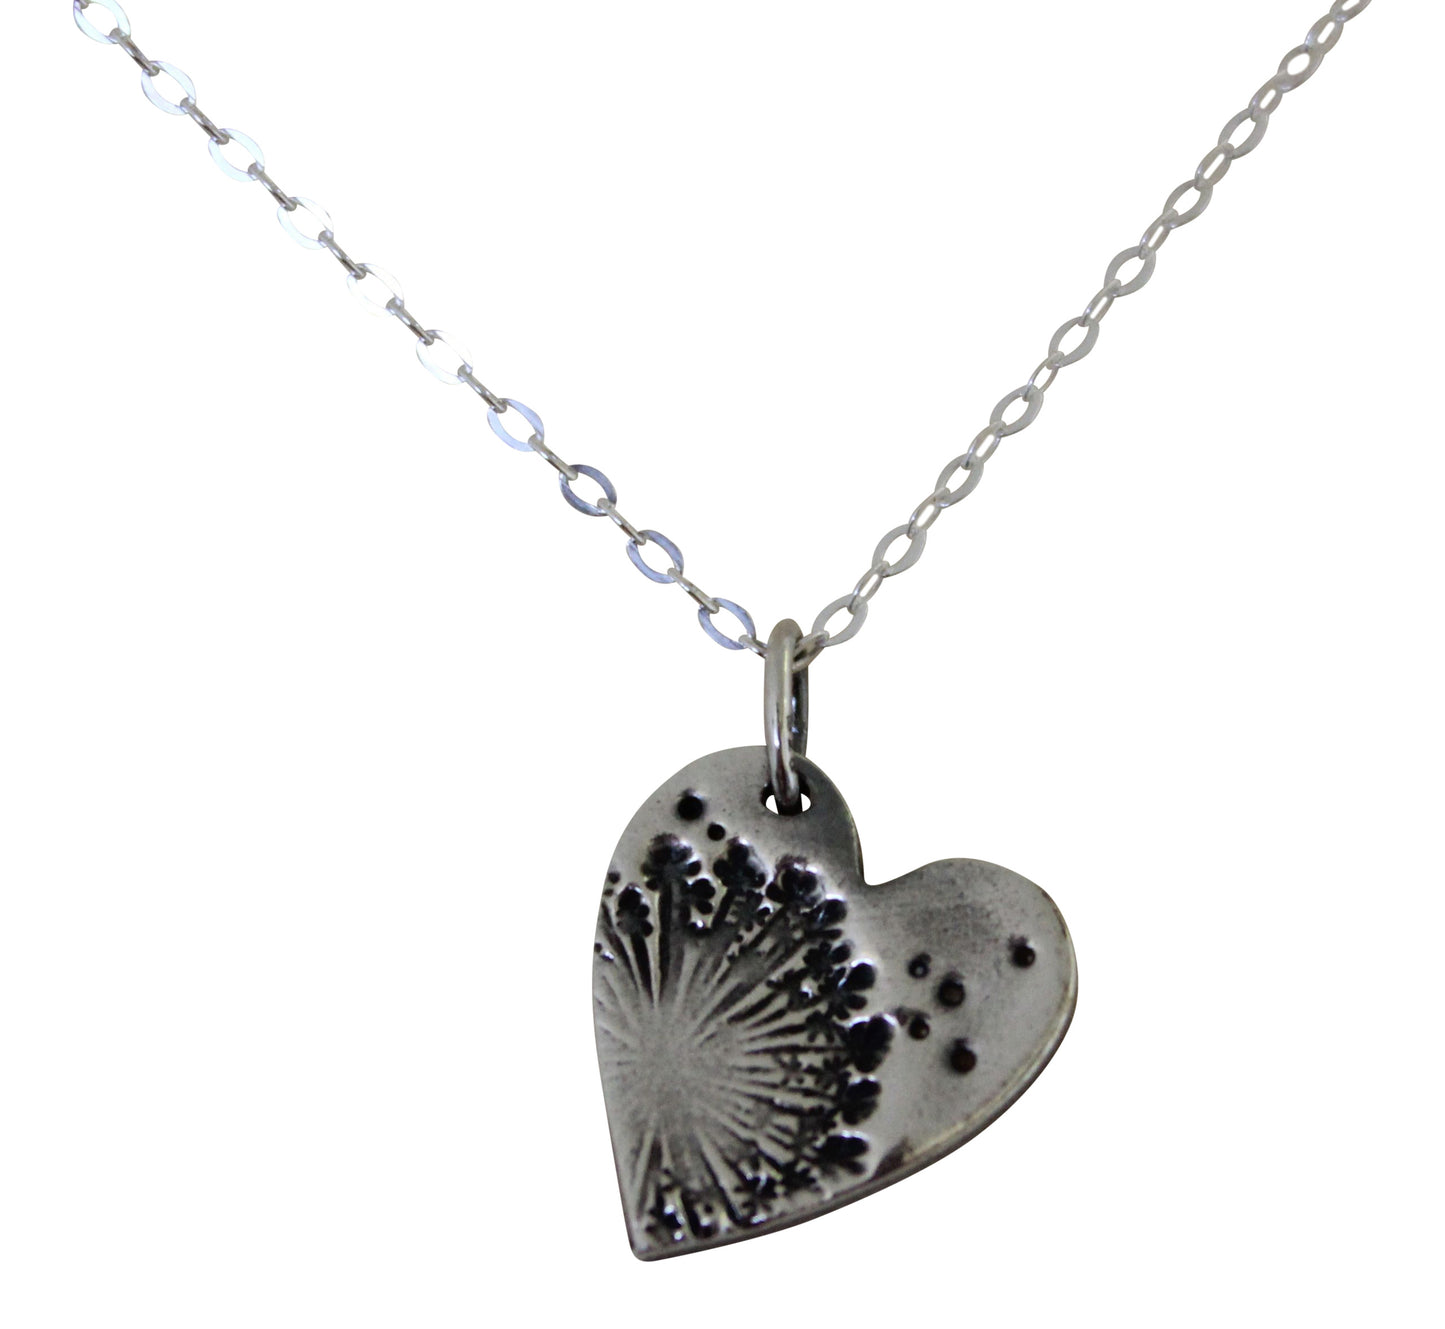 Dandelion Wish Heart Necklace